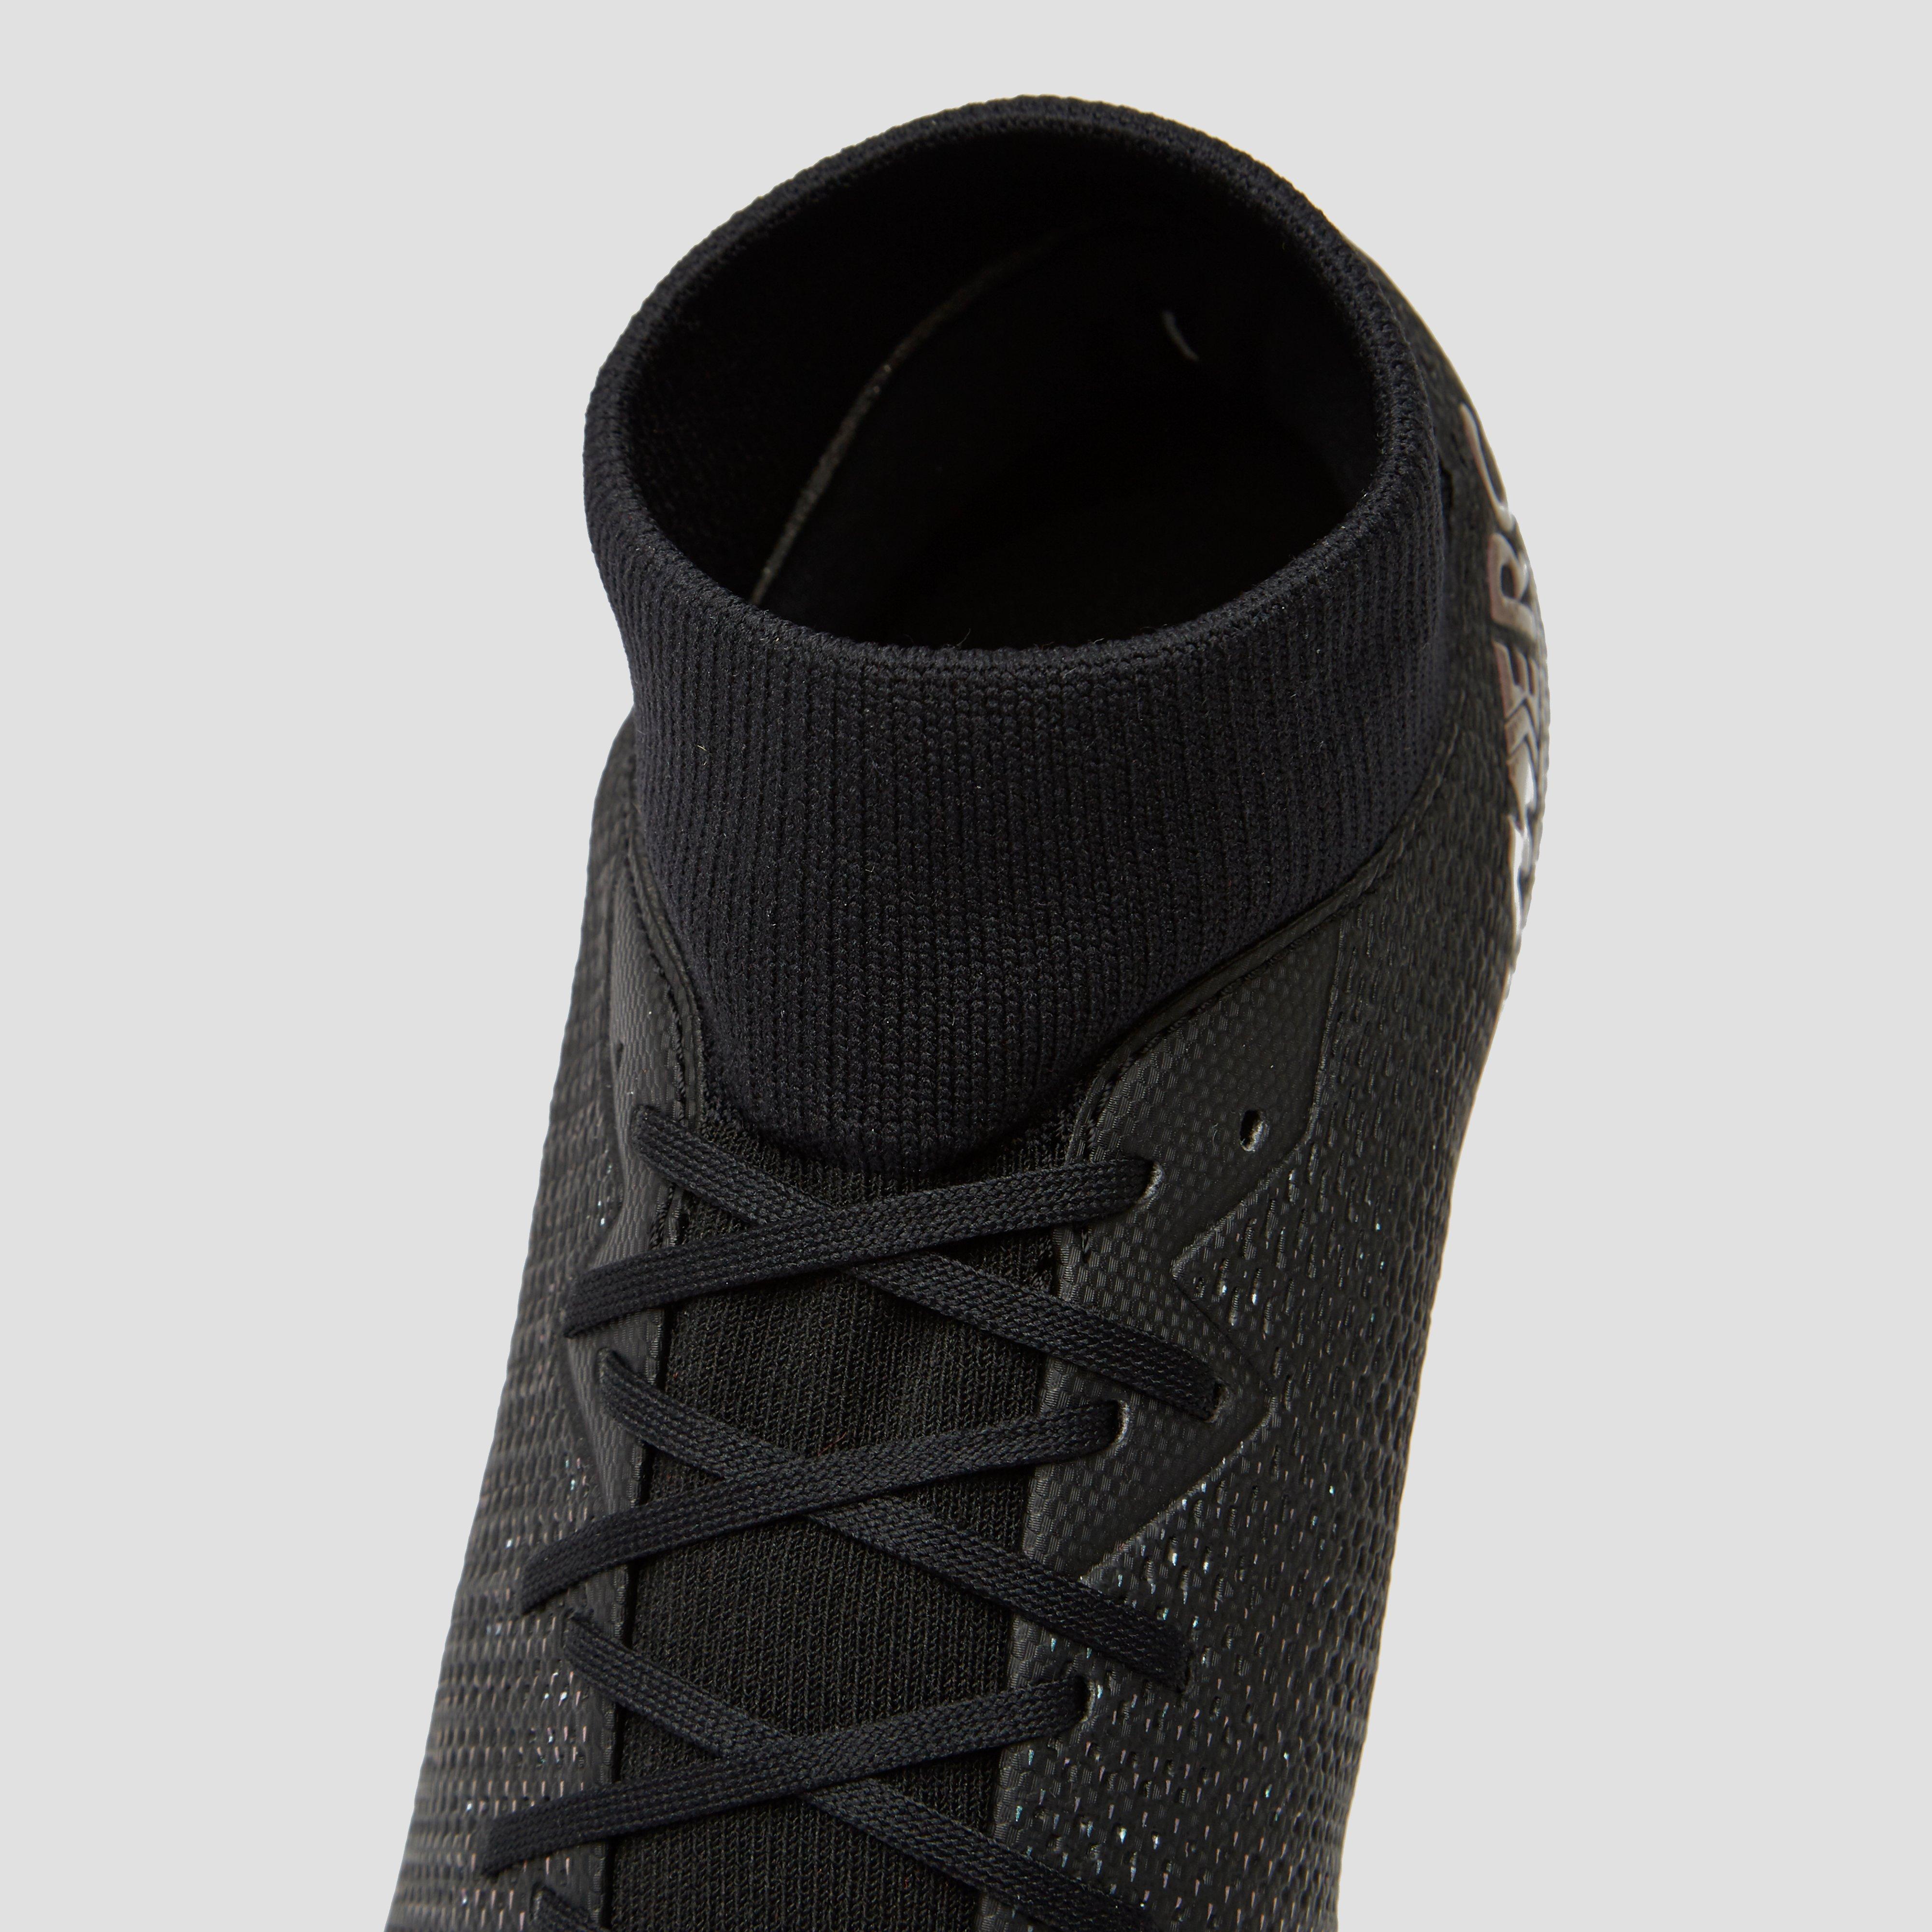 New Nike Mercurial Superfly 6 Academy CR7 MG football boots!